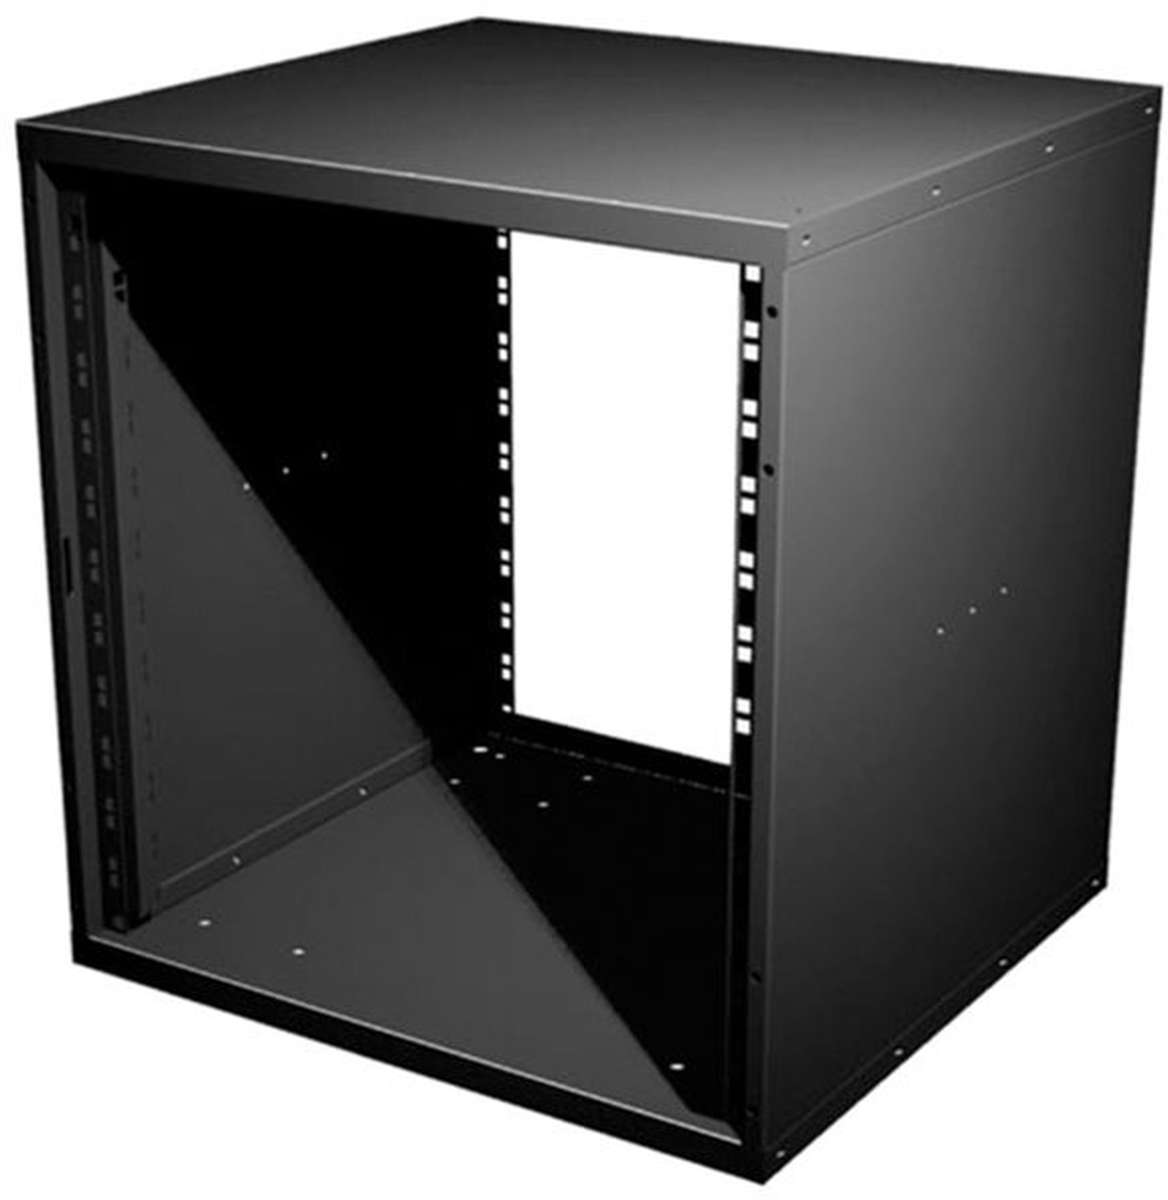 Penn Elcom R8400-28 28U 19" Flat Pack Rack Cabinet 480mm/18.9" Deep product image. Click to enlarge.